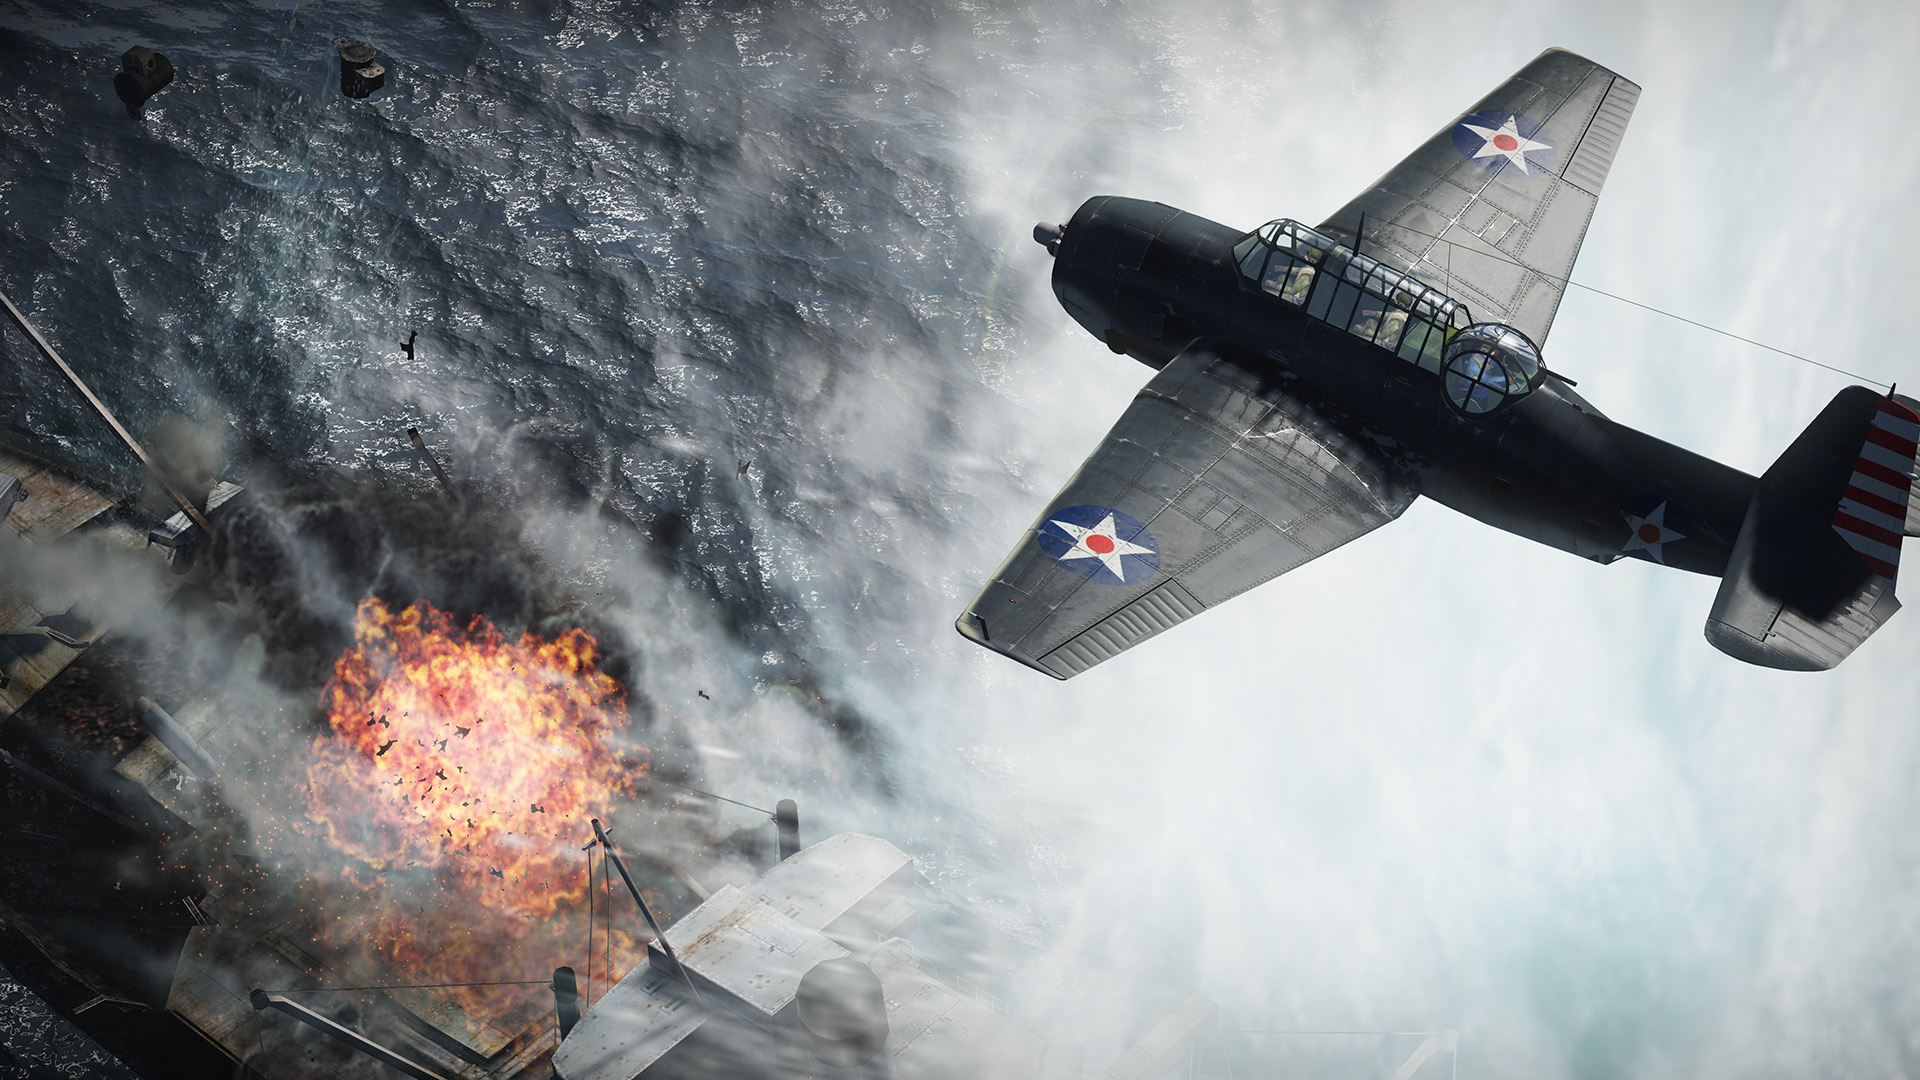 General 1920x1080 video games video game art digital art War Thunder airplane military military vehicle military aircraft explosion ship World War II